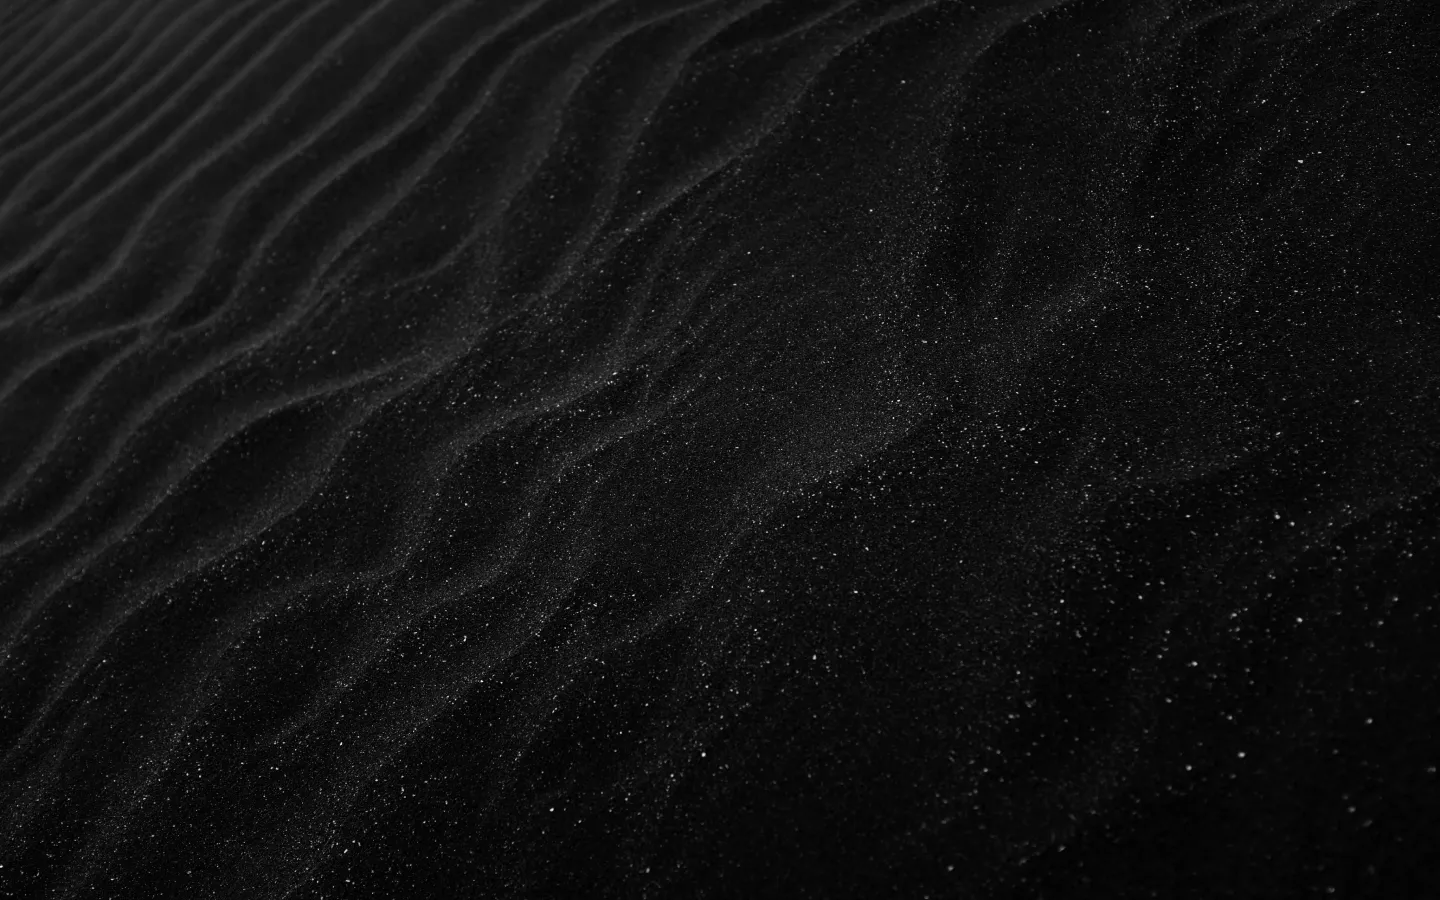 The arid surface of dark sand